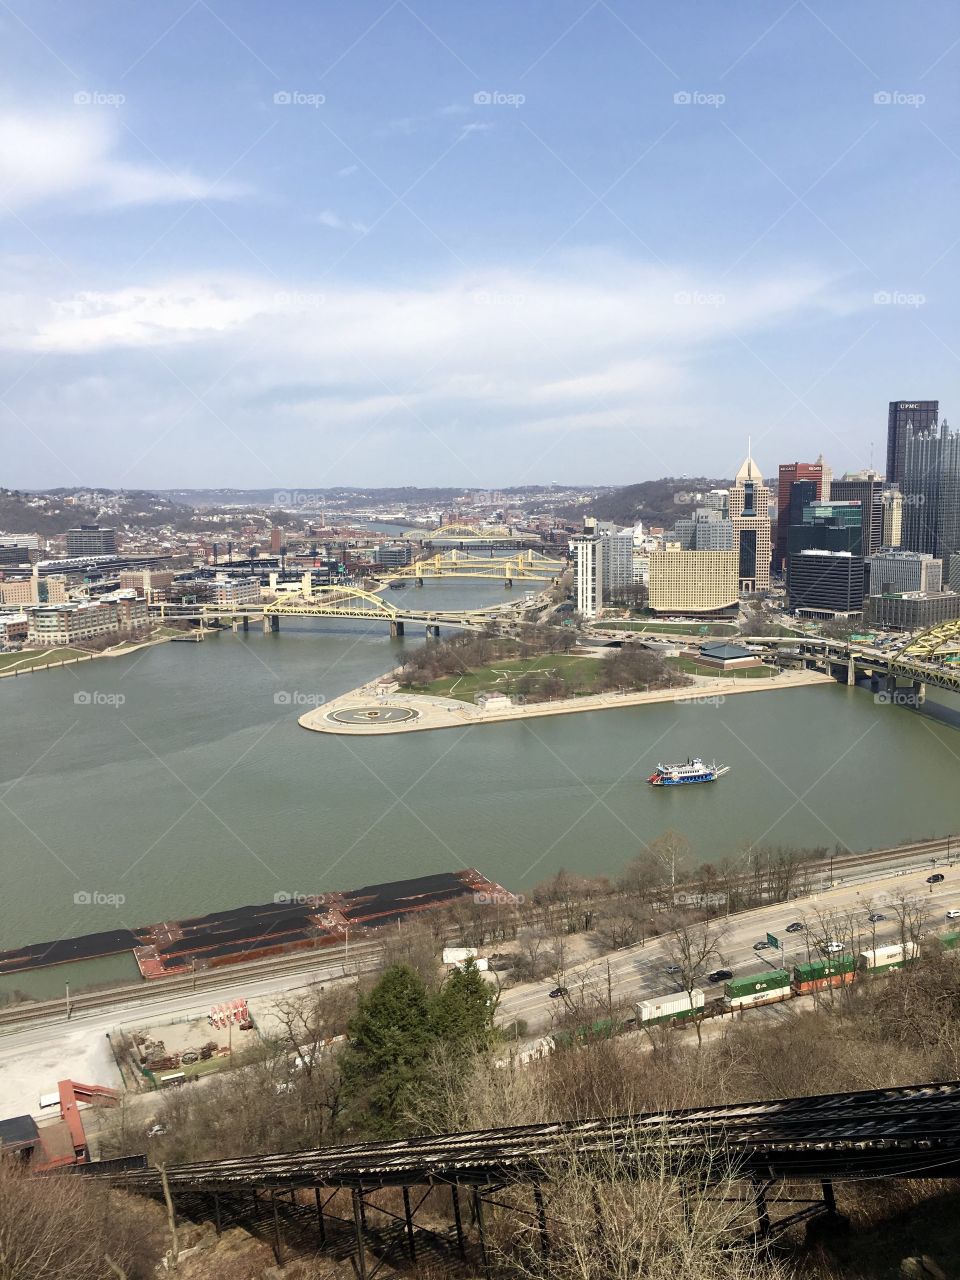 Pittsburgh landscape with ferry. Bridge. Pittsburgh skyline. Train. Harbor. Scenic. 